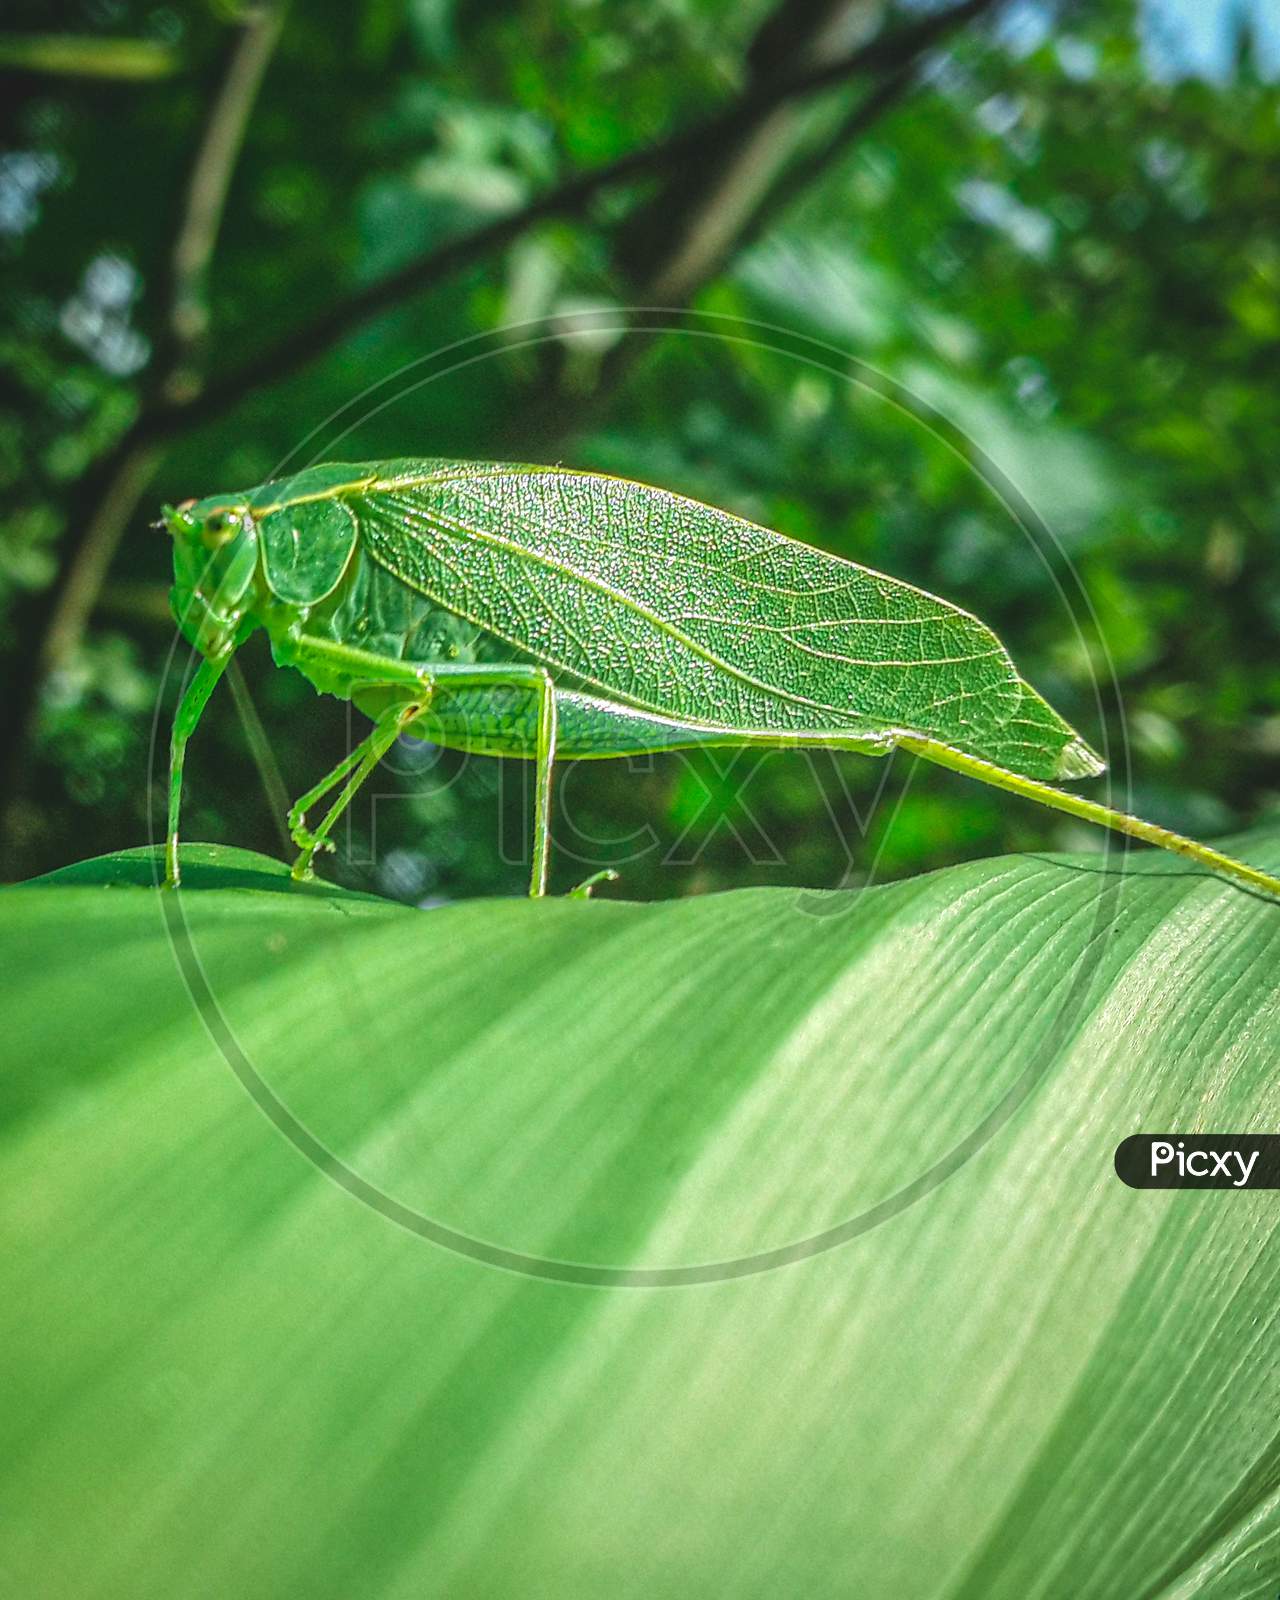 Green bush cricket grasshopper on a large leaf